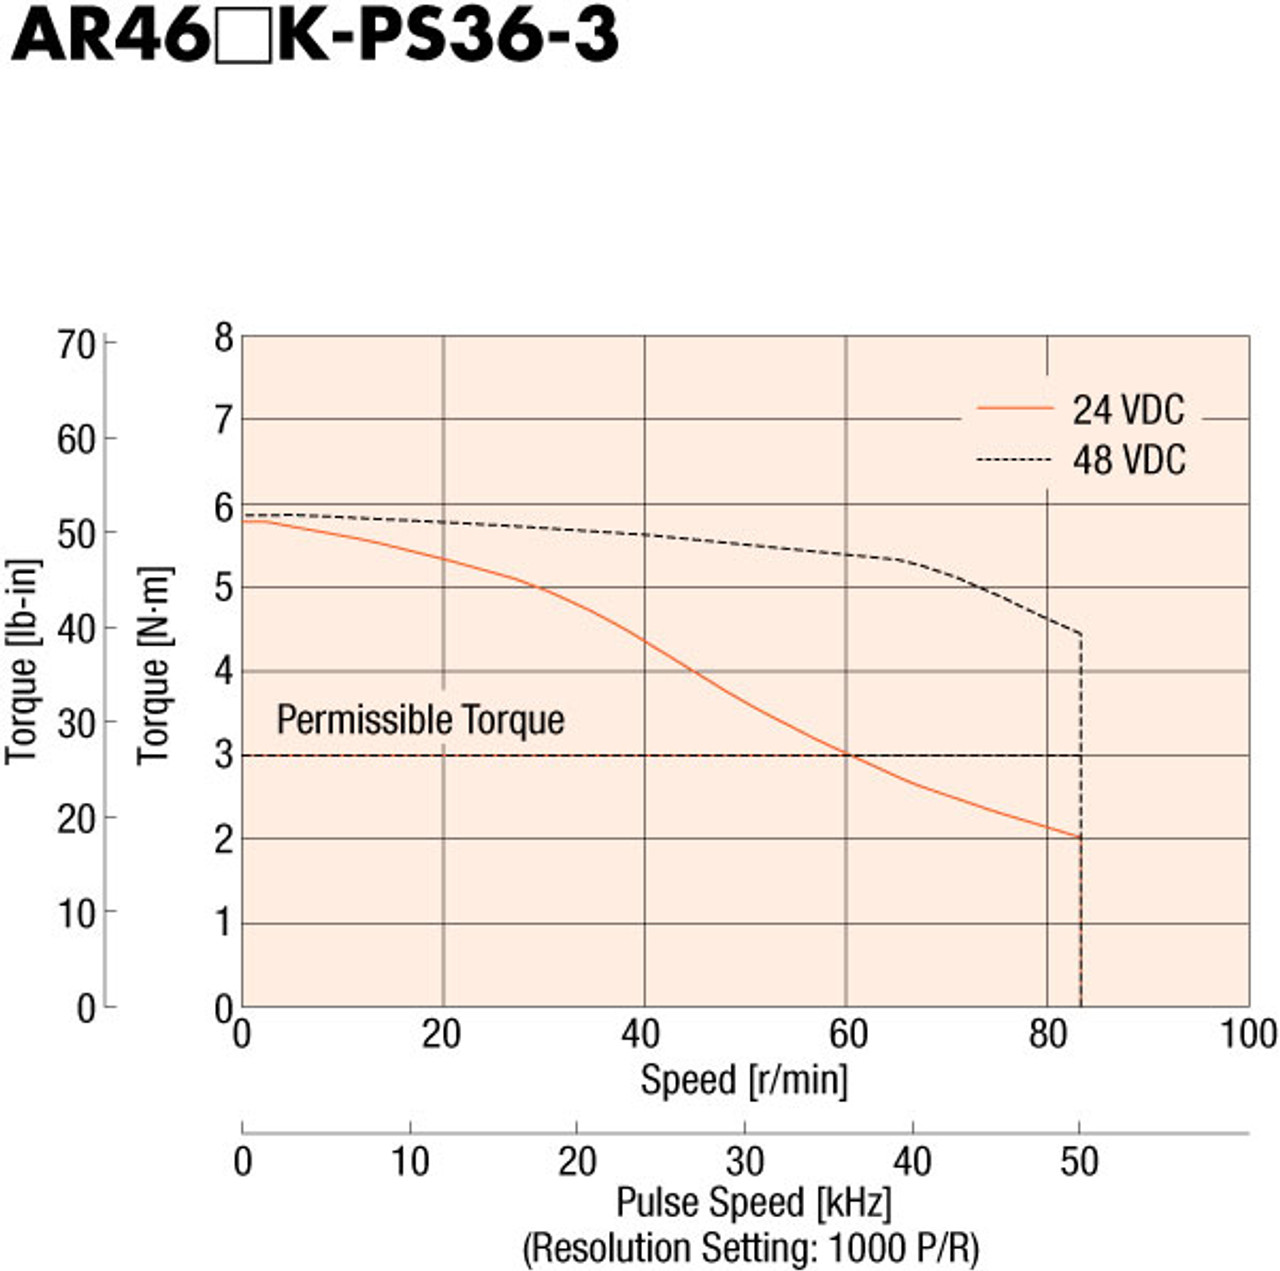 AR46AKD-PS36-3 - Speed-Torque